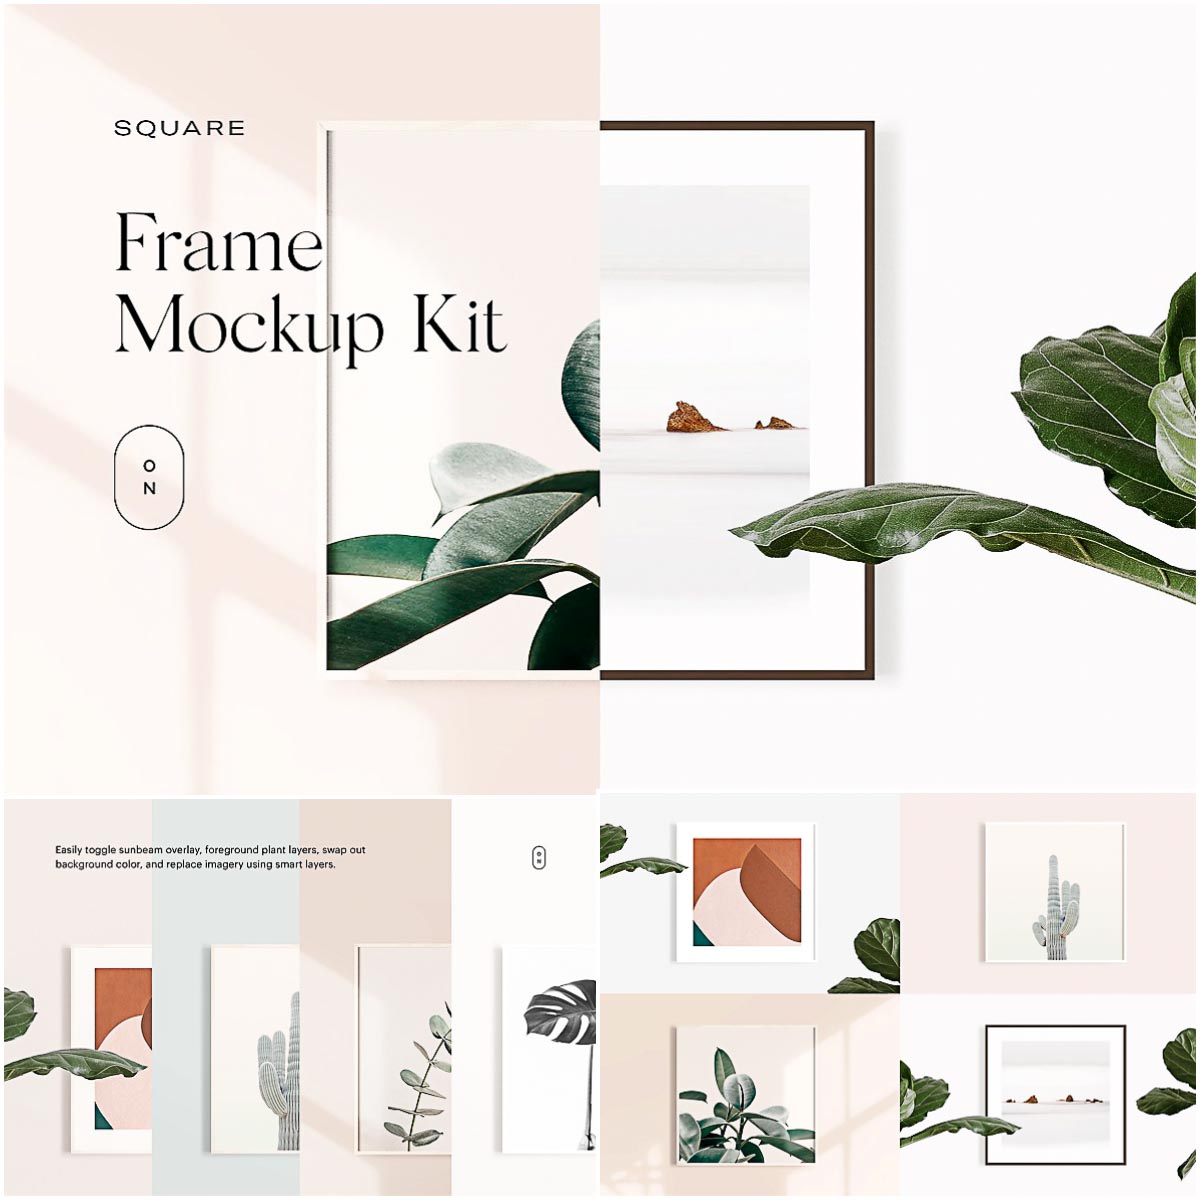 Square Frame Mockup Kit | Free download